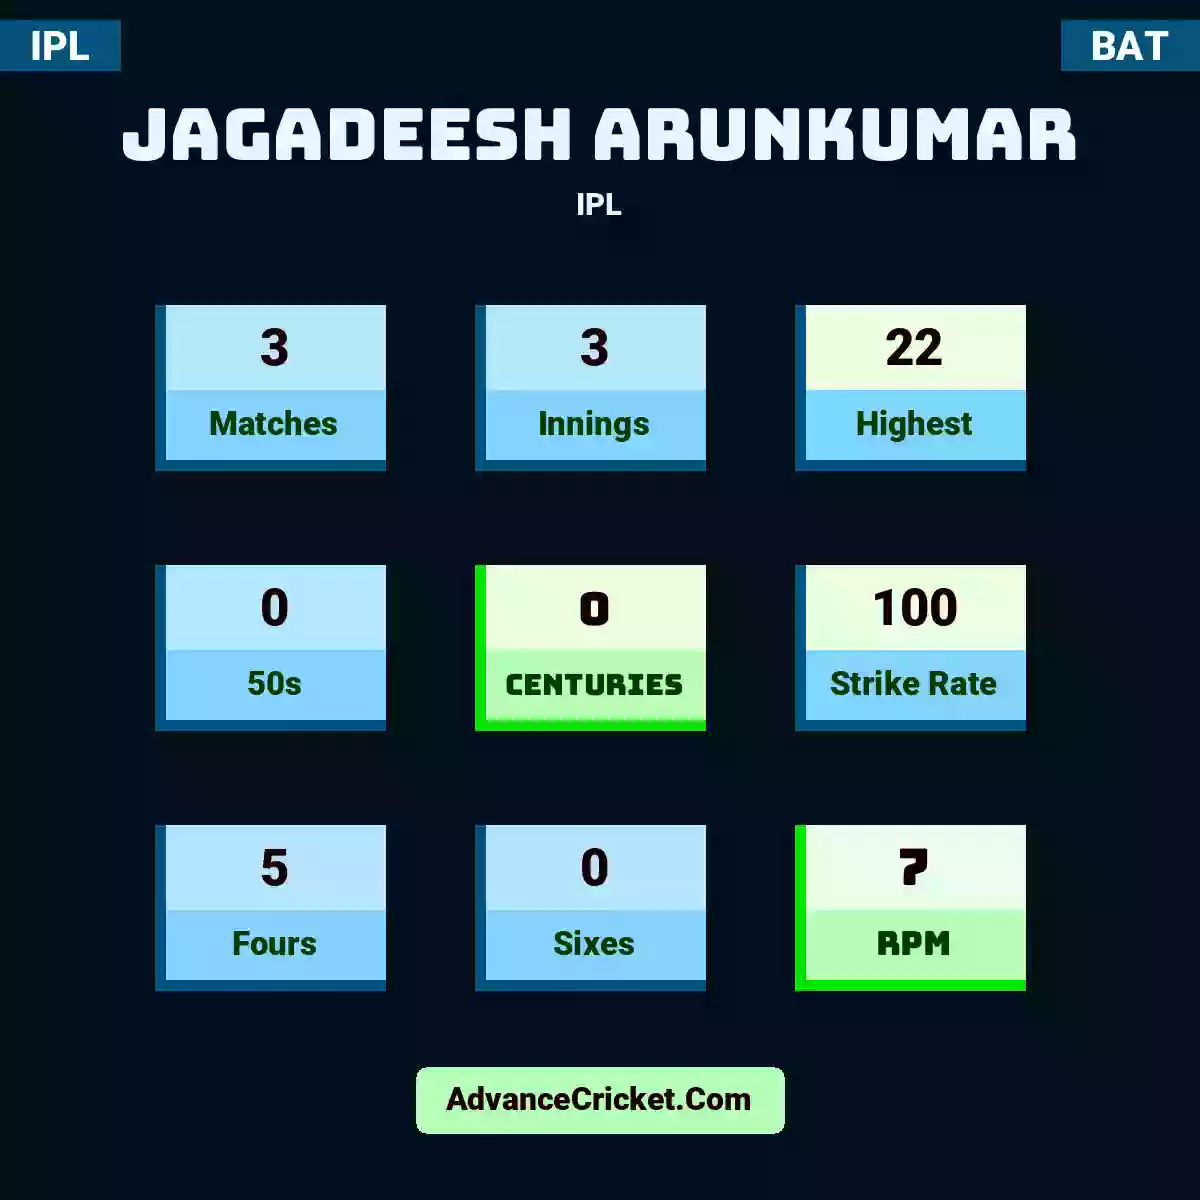 Jagadeesh Arunkumar IPL , Jagadeesh Arunkumar played 3 matches, scored 22 runs as highest, 0 half-centuries, and 0 centuries, with a strike rate of 100. J.Arunkumar hit 5 fours and 0 sixes, with an RPM of 7.